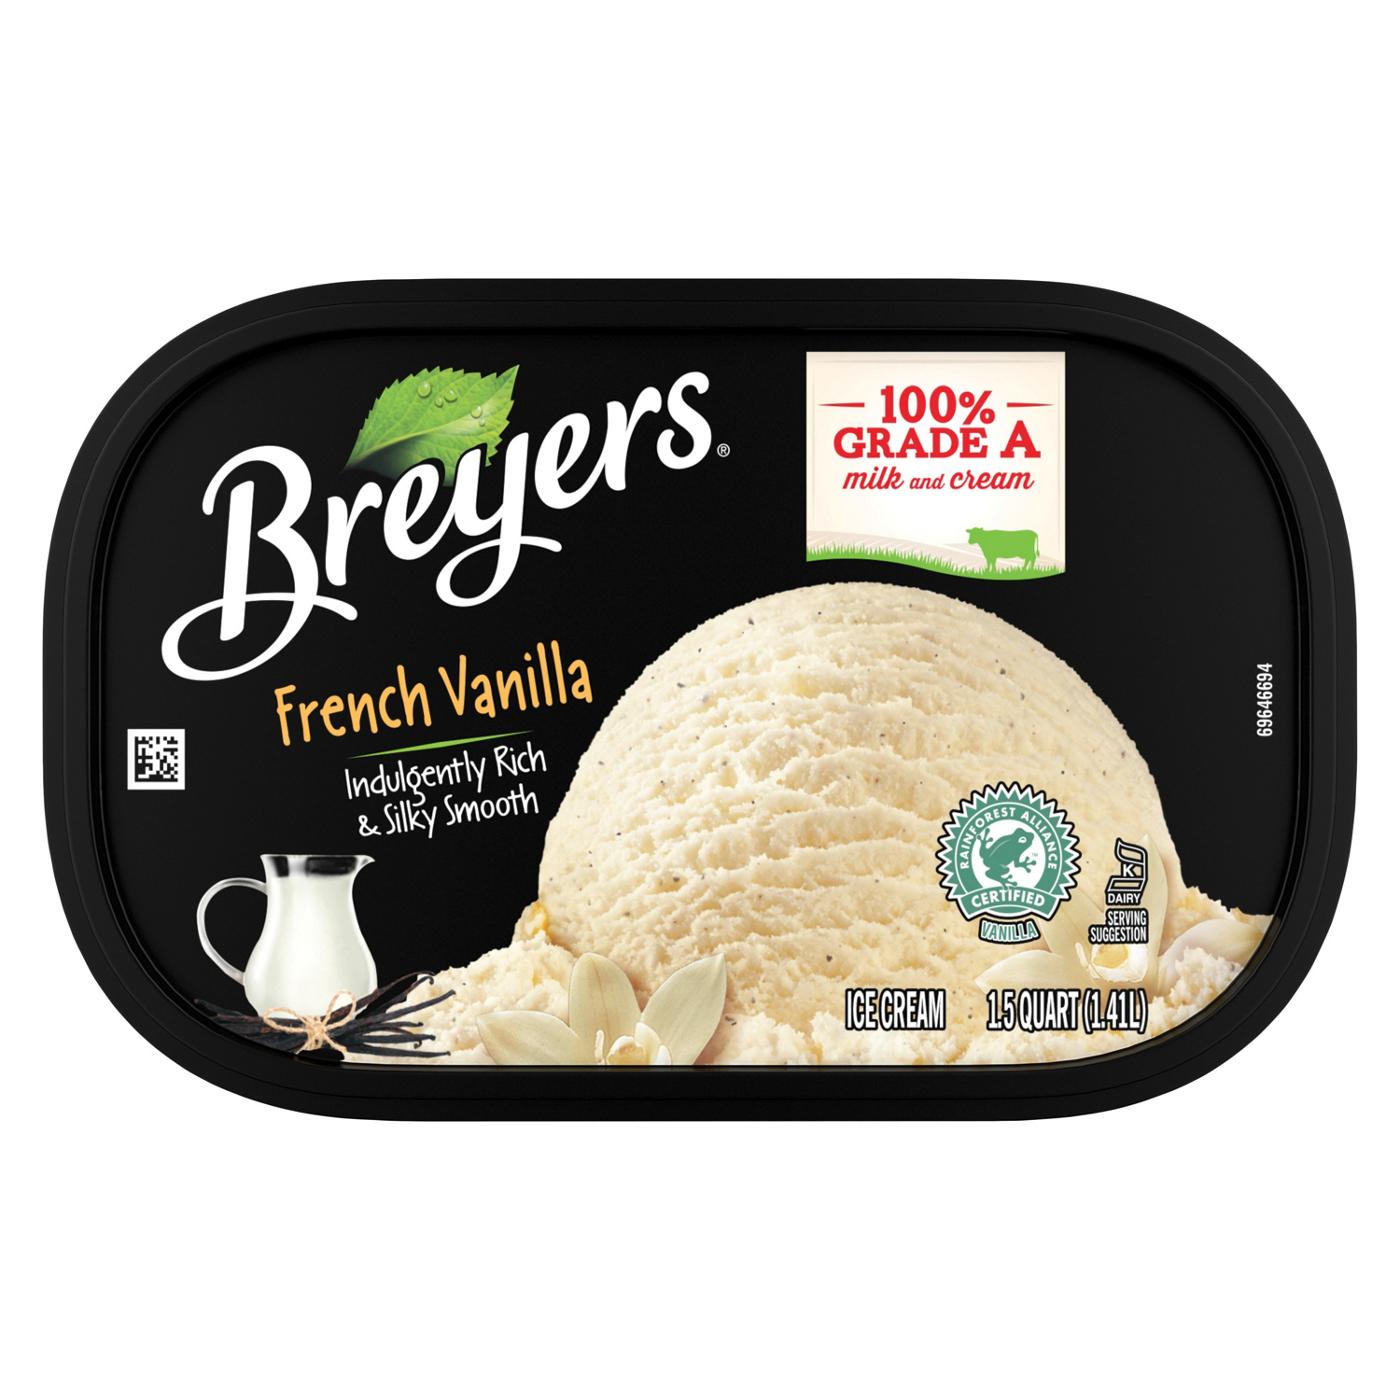 Breyers French Vanilla Ice Cream; image 6 of 7